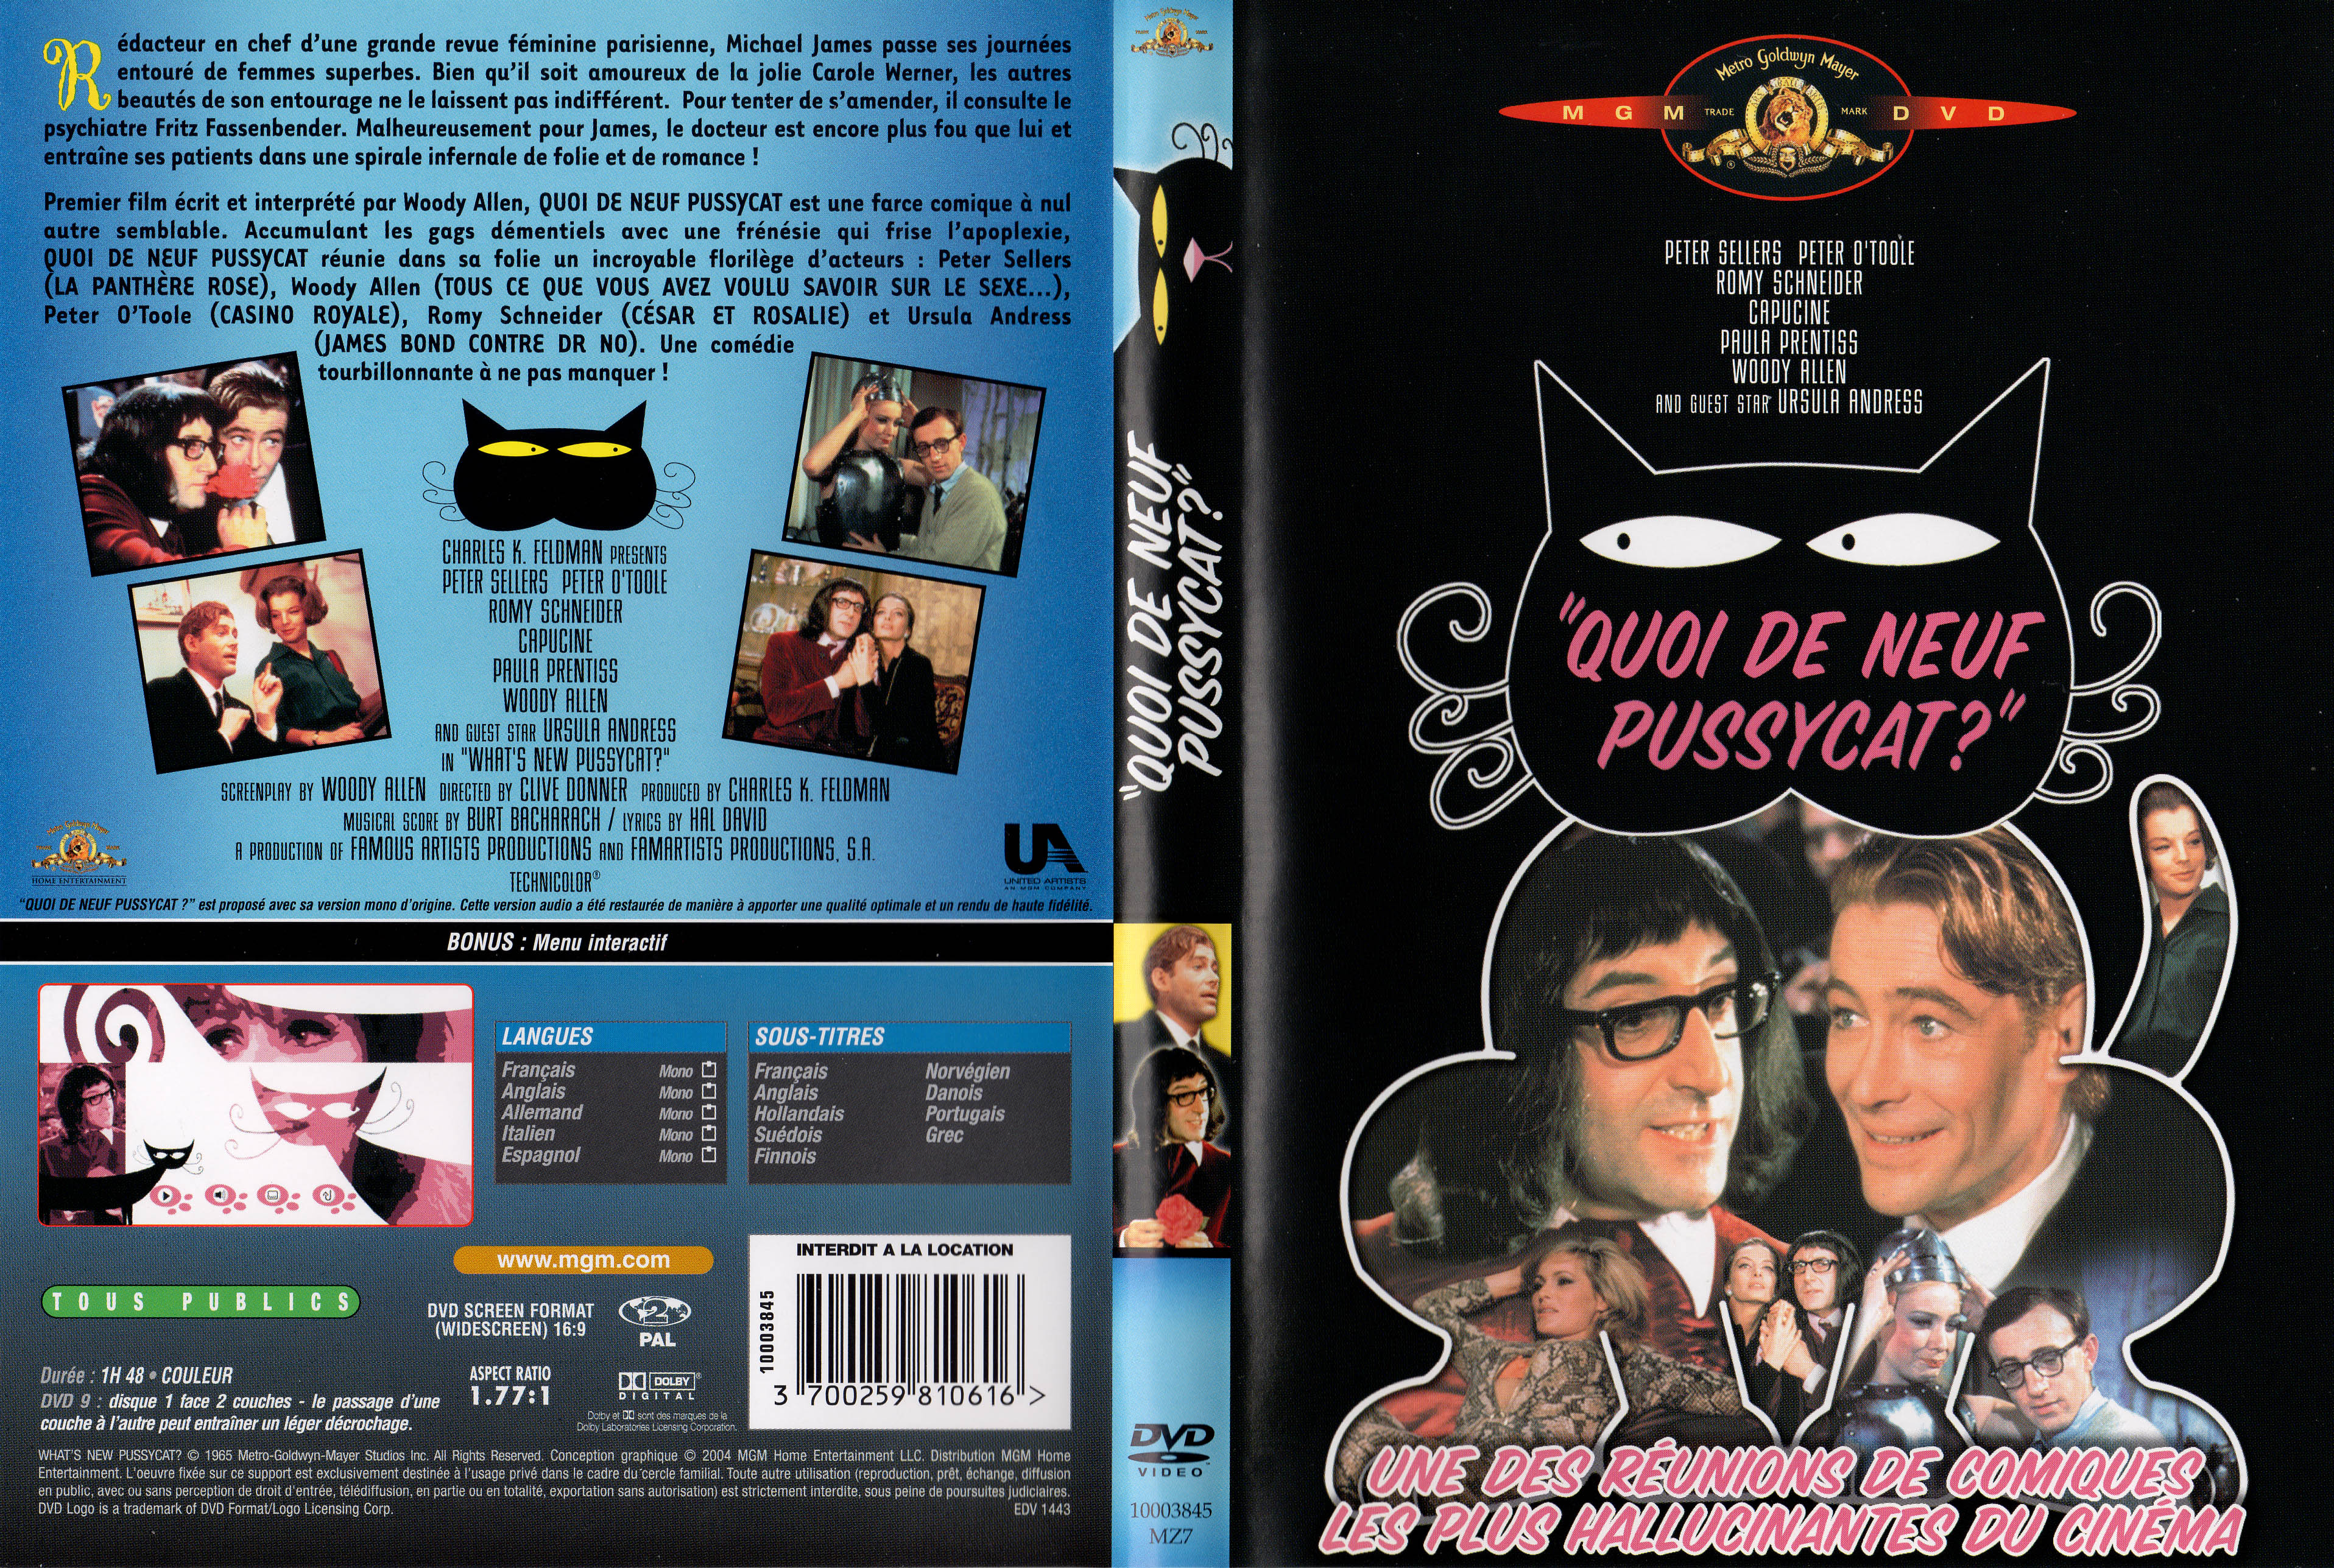 Jaquette DVD Quoi de neuf, Pussycat